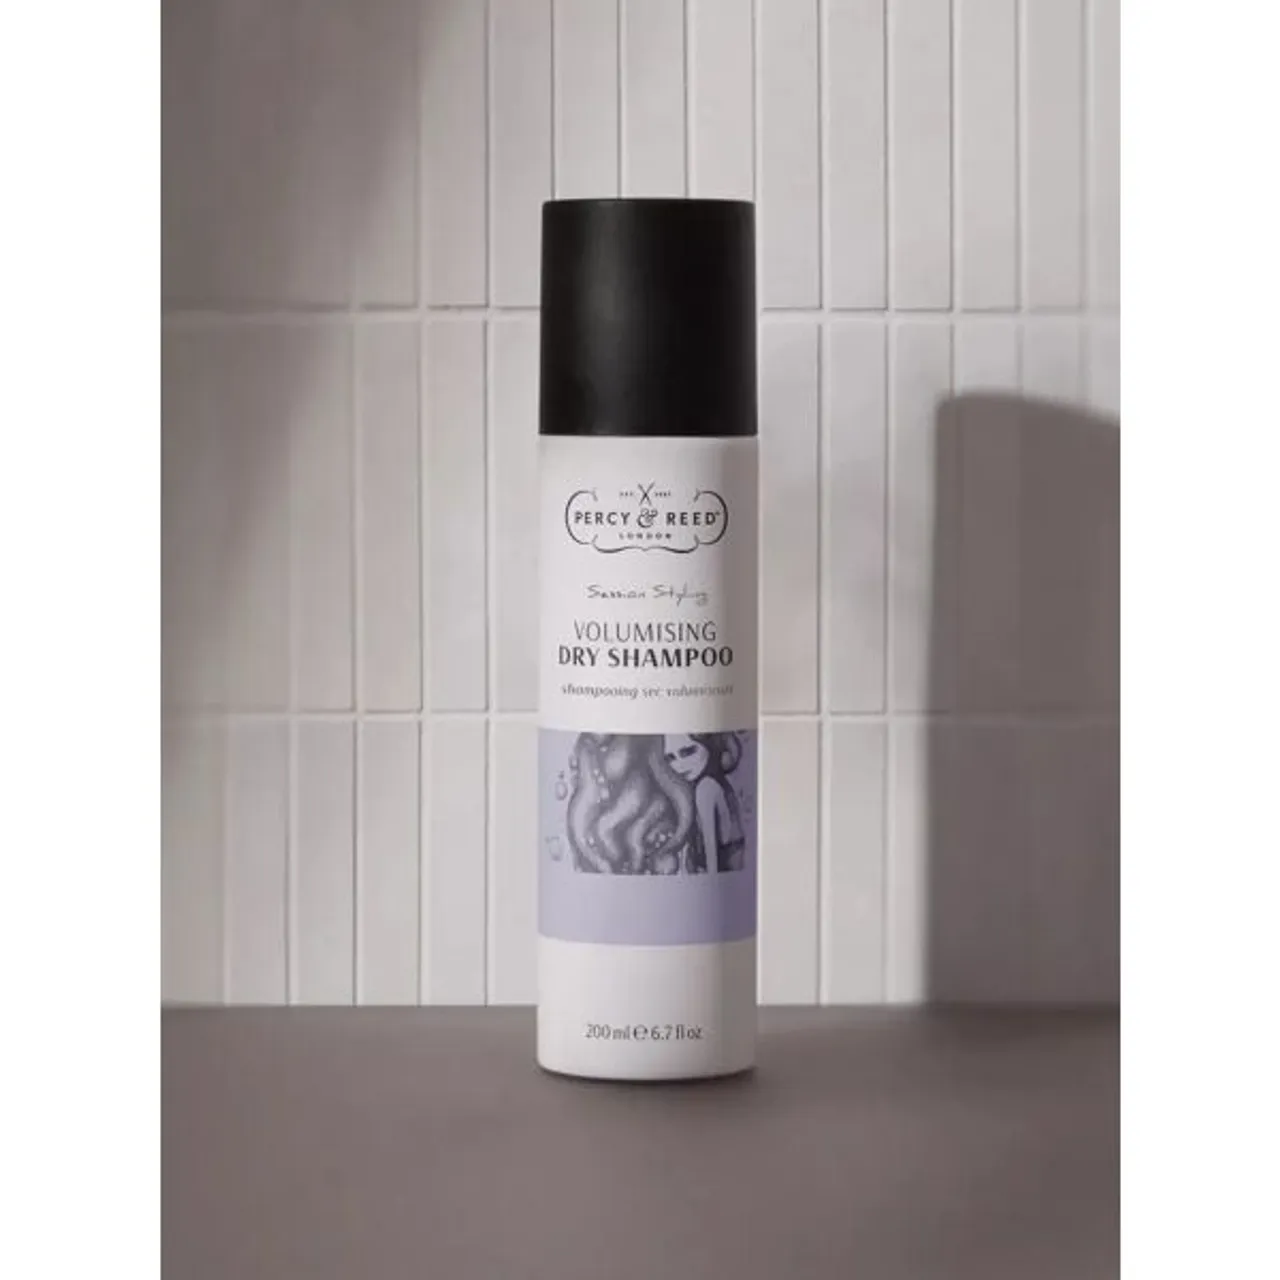 Percy & Reed Session Styling Volumising Dry Shampoo, 200ml - Unisex - Size: 200ml